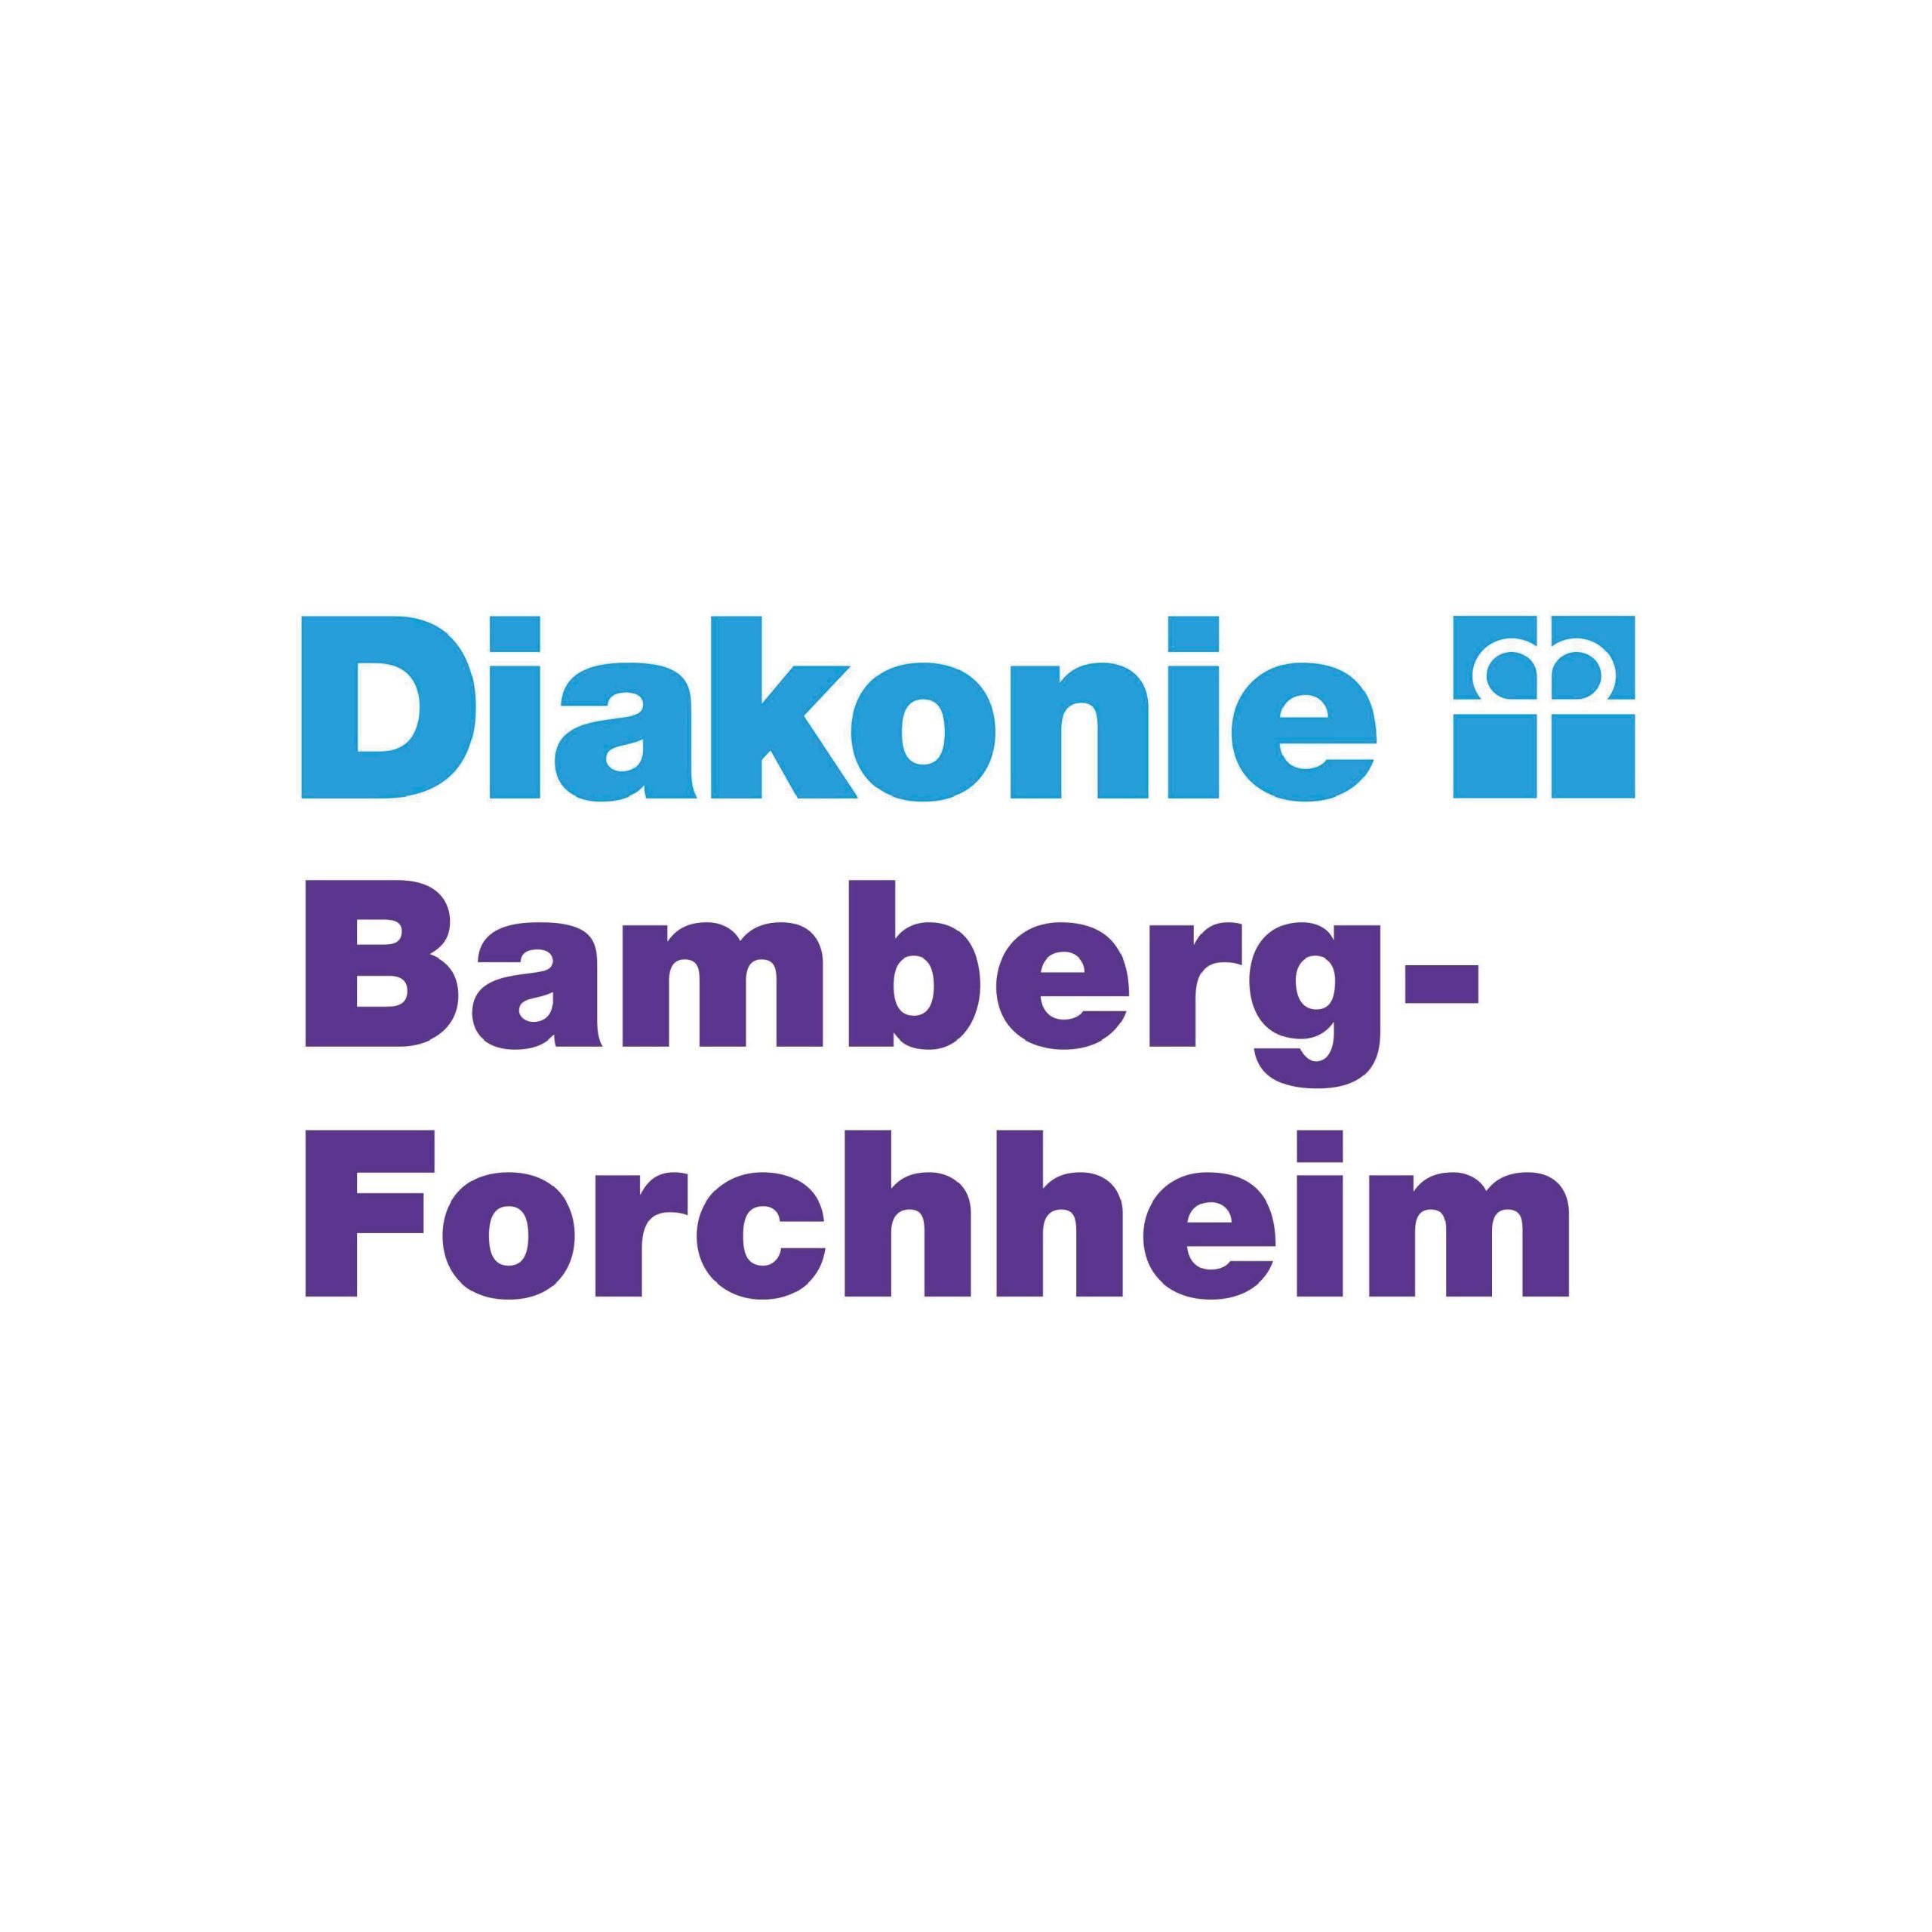 Diakonie Bamberg Forchheim